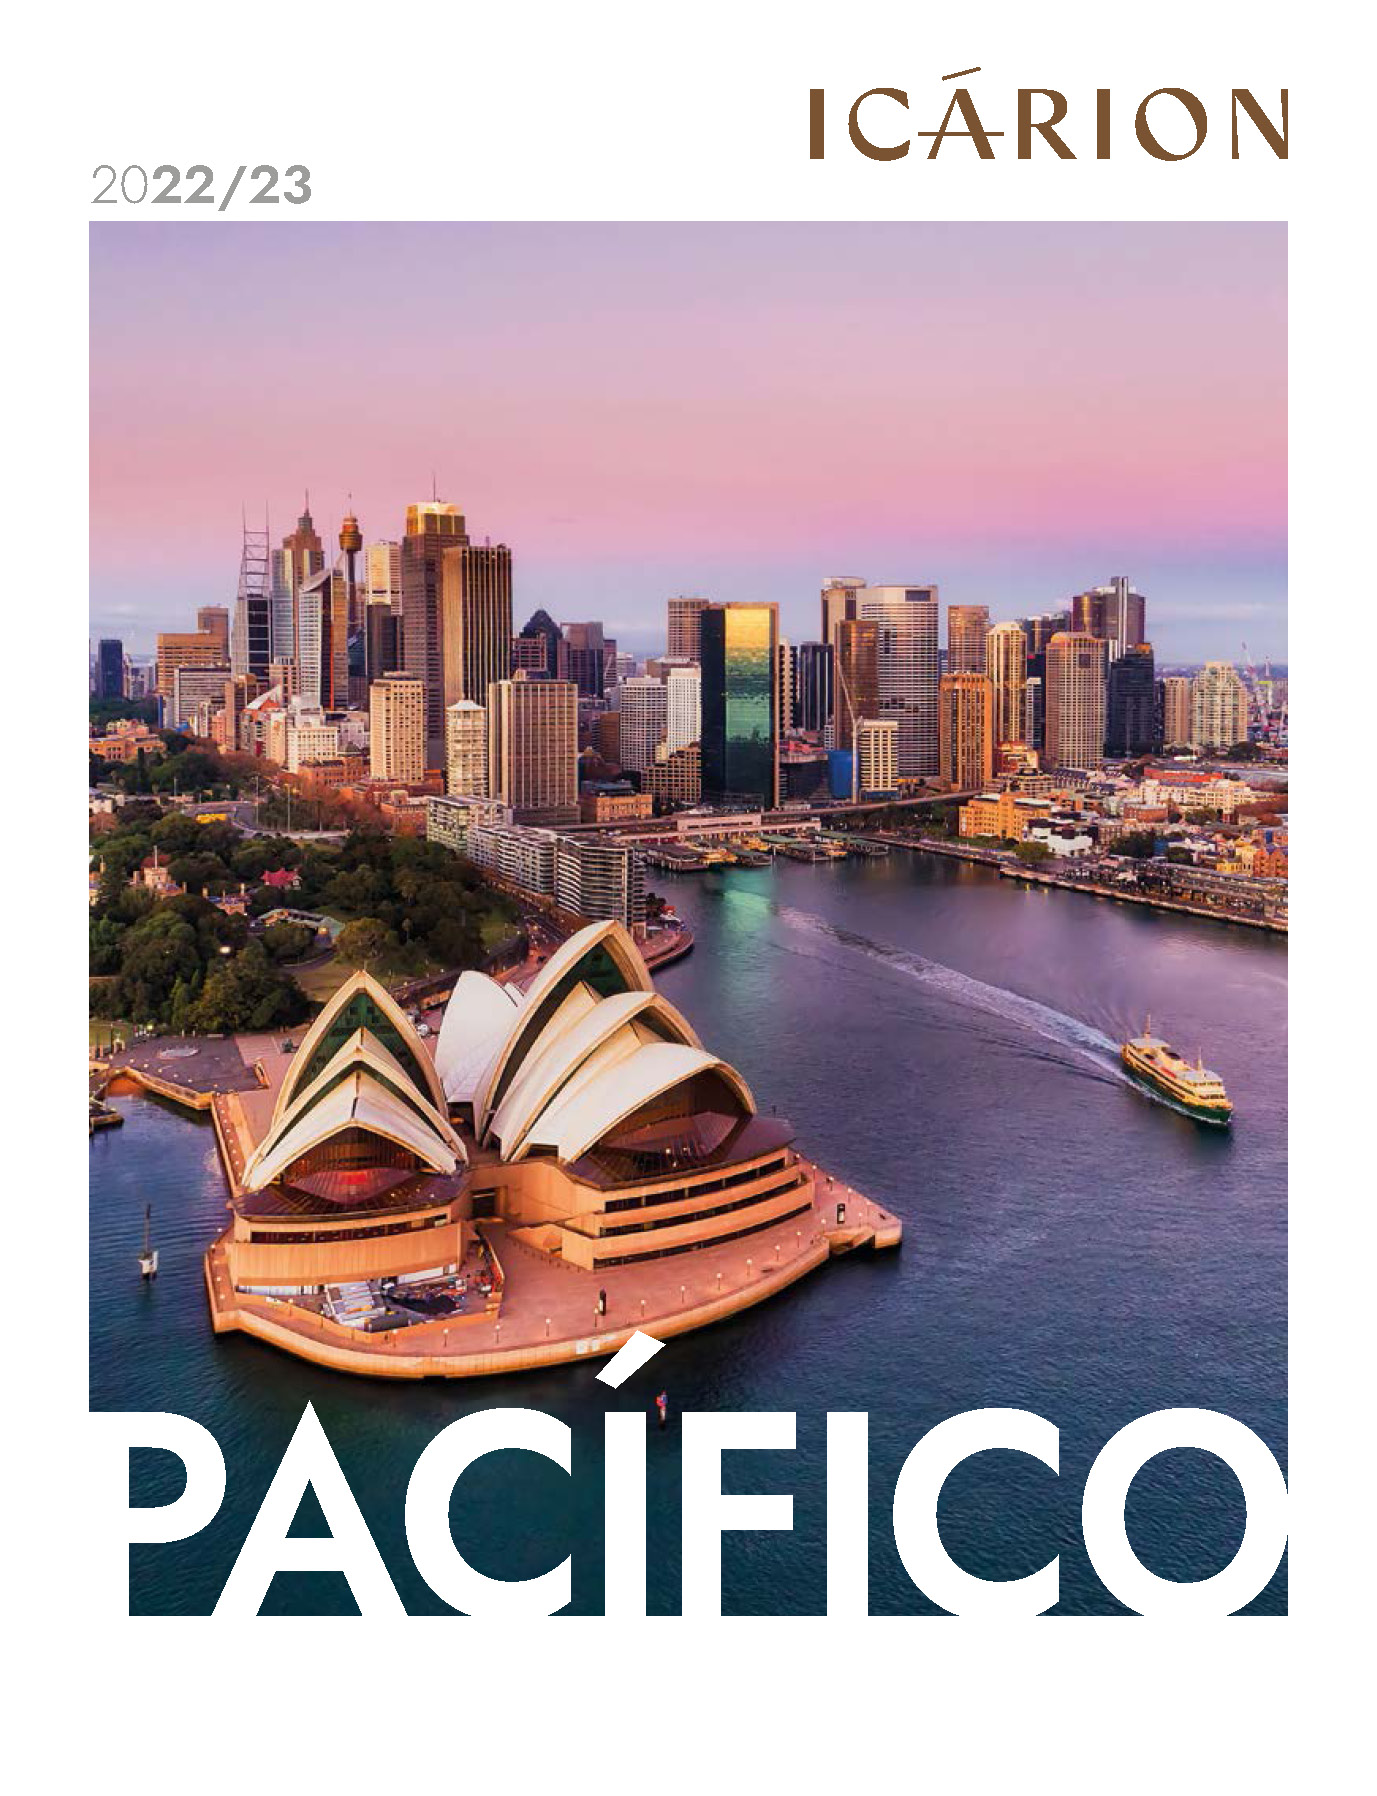 Catalogo Icarion Pacifico 2022-2023